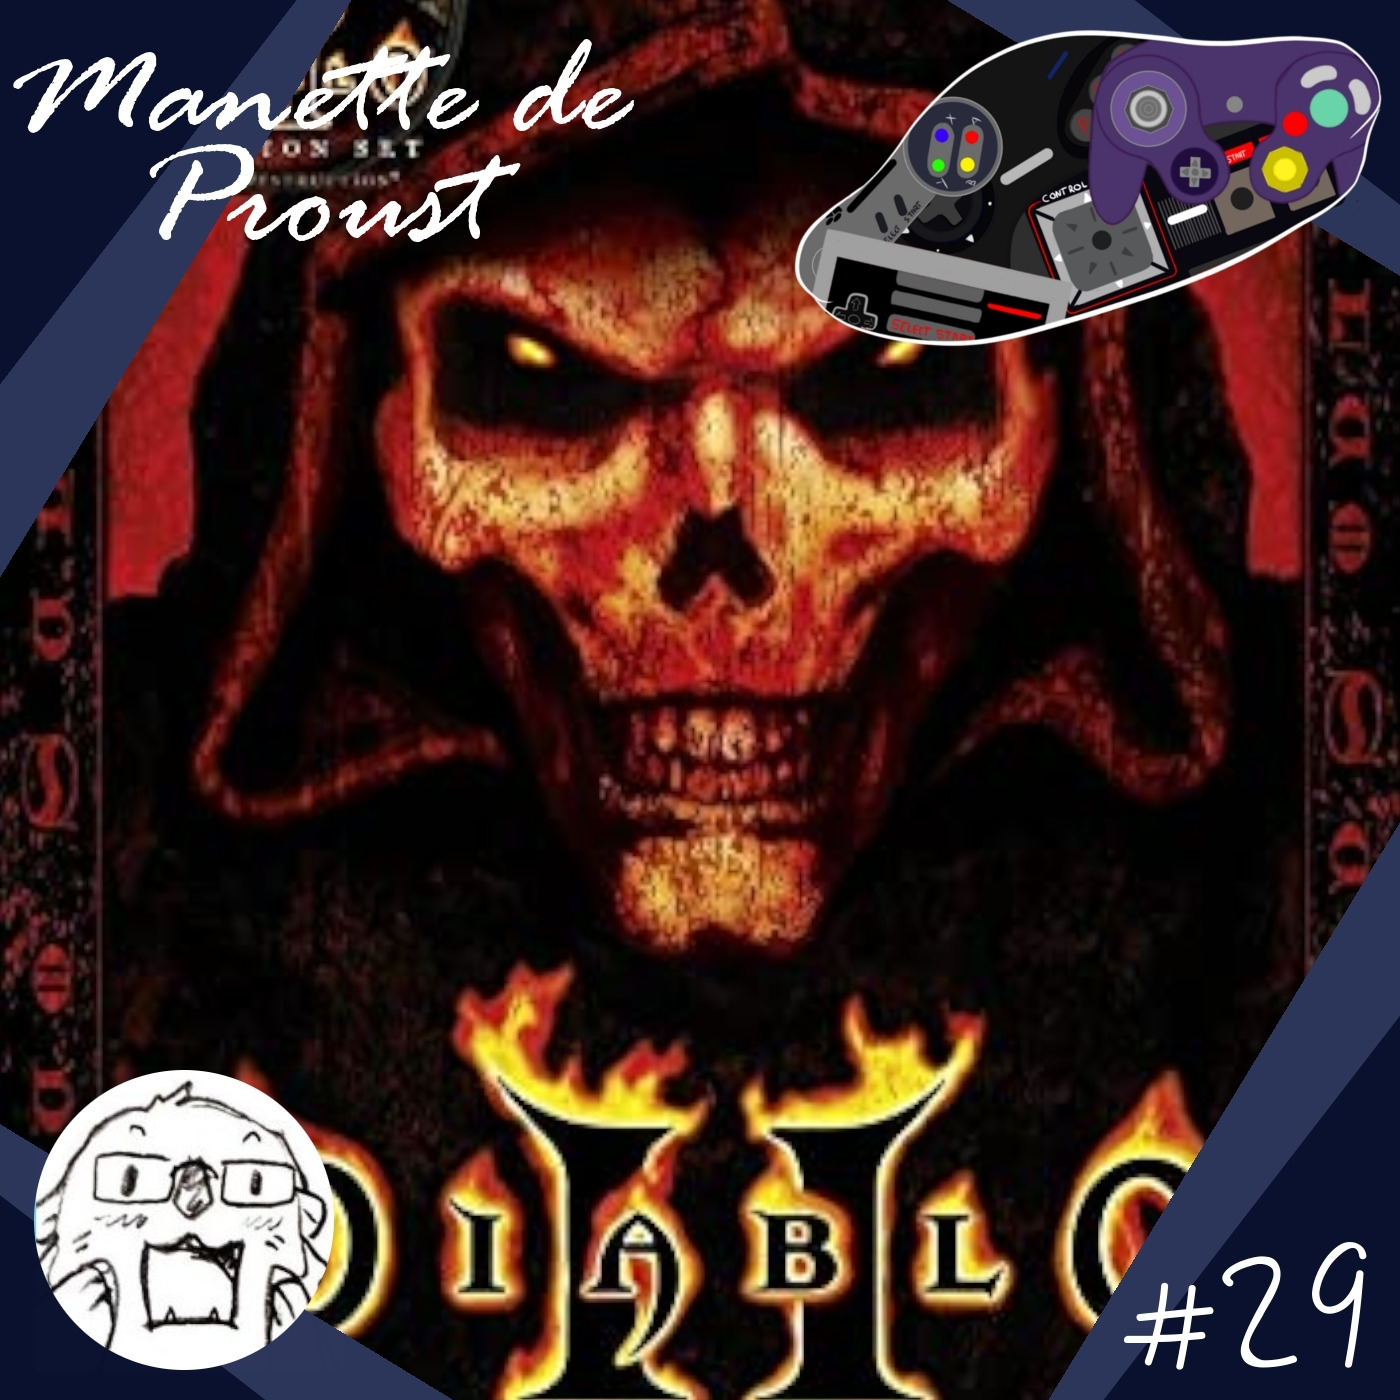 Manette de Proust S2 #29 : Diablo II (avec Corentin Benoit-Gonin)